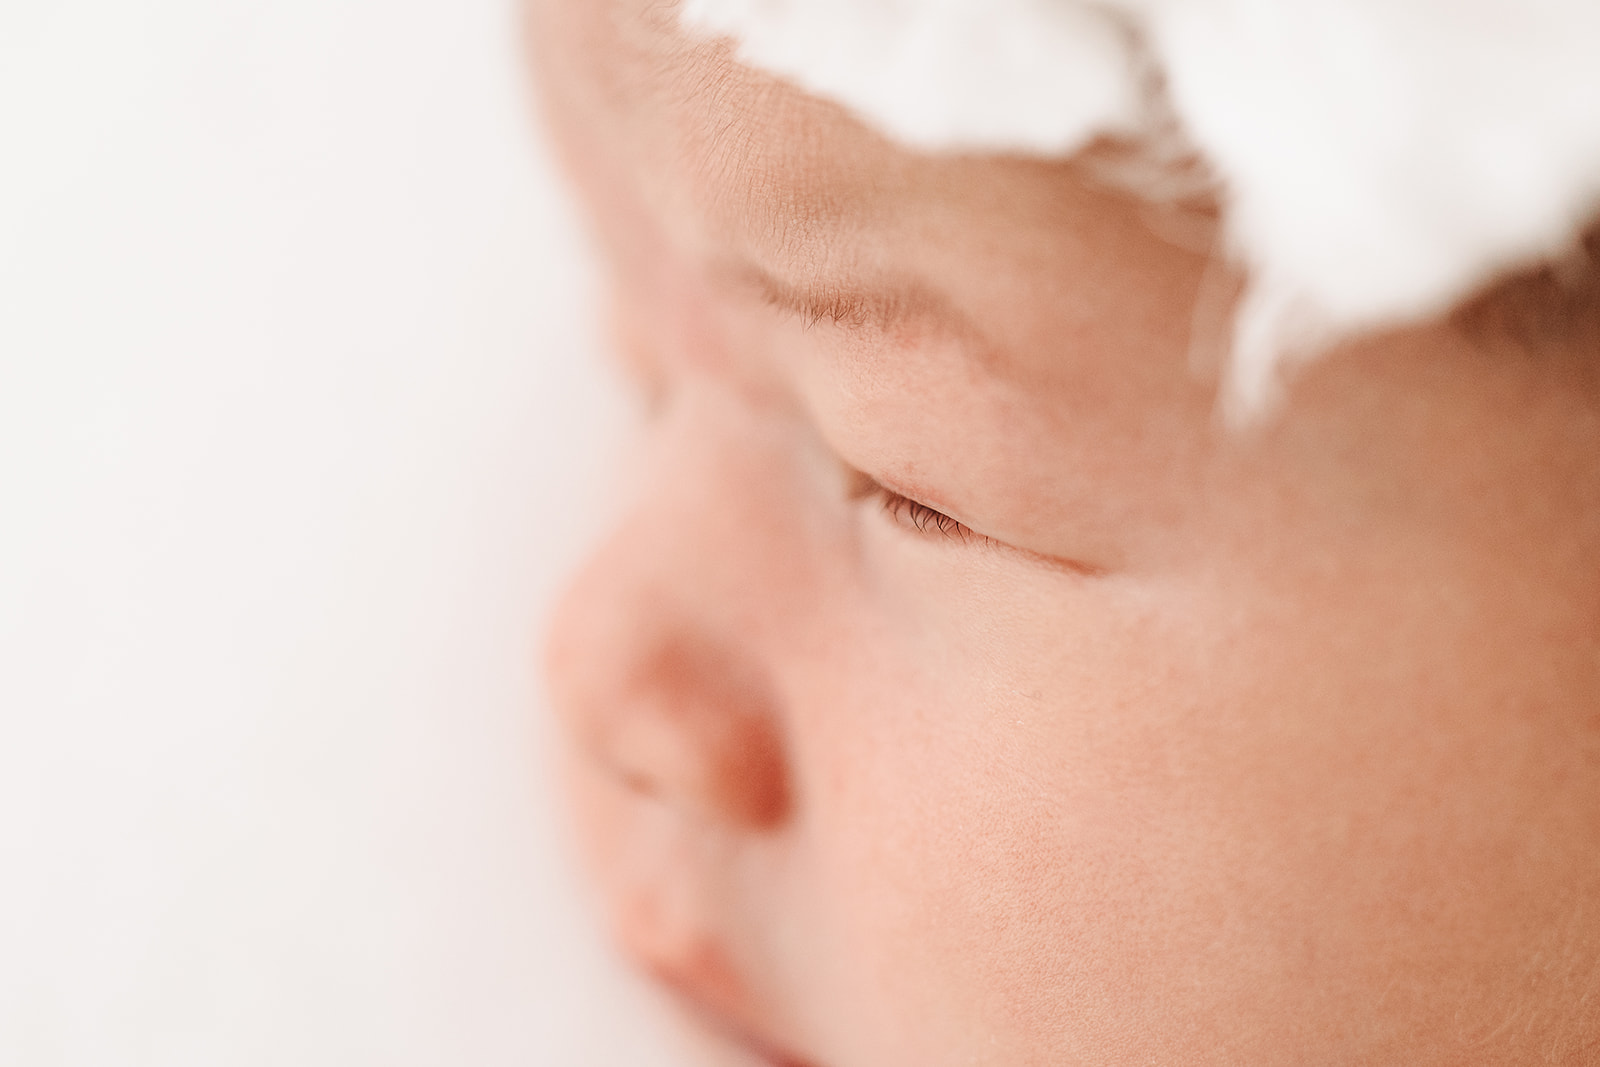 Details of a sleeping newborn baby's face